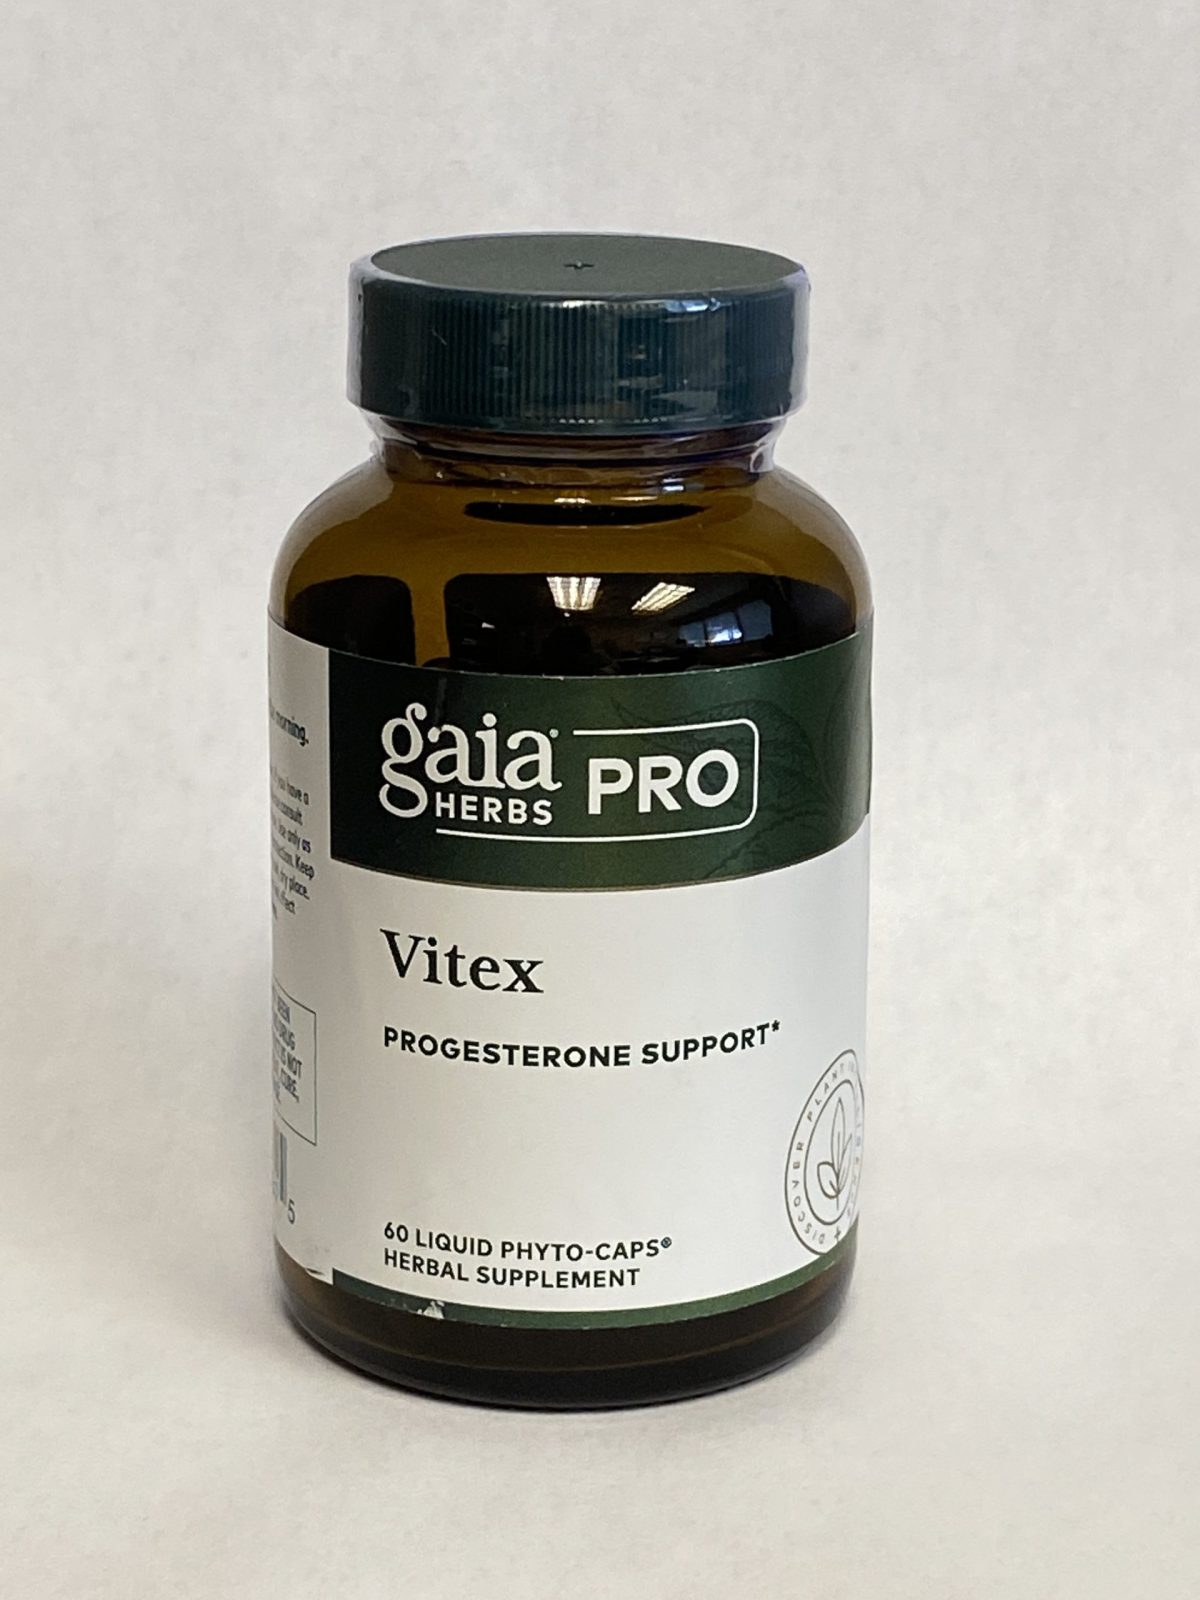 Vitex label